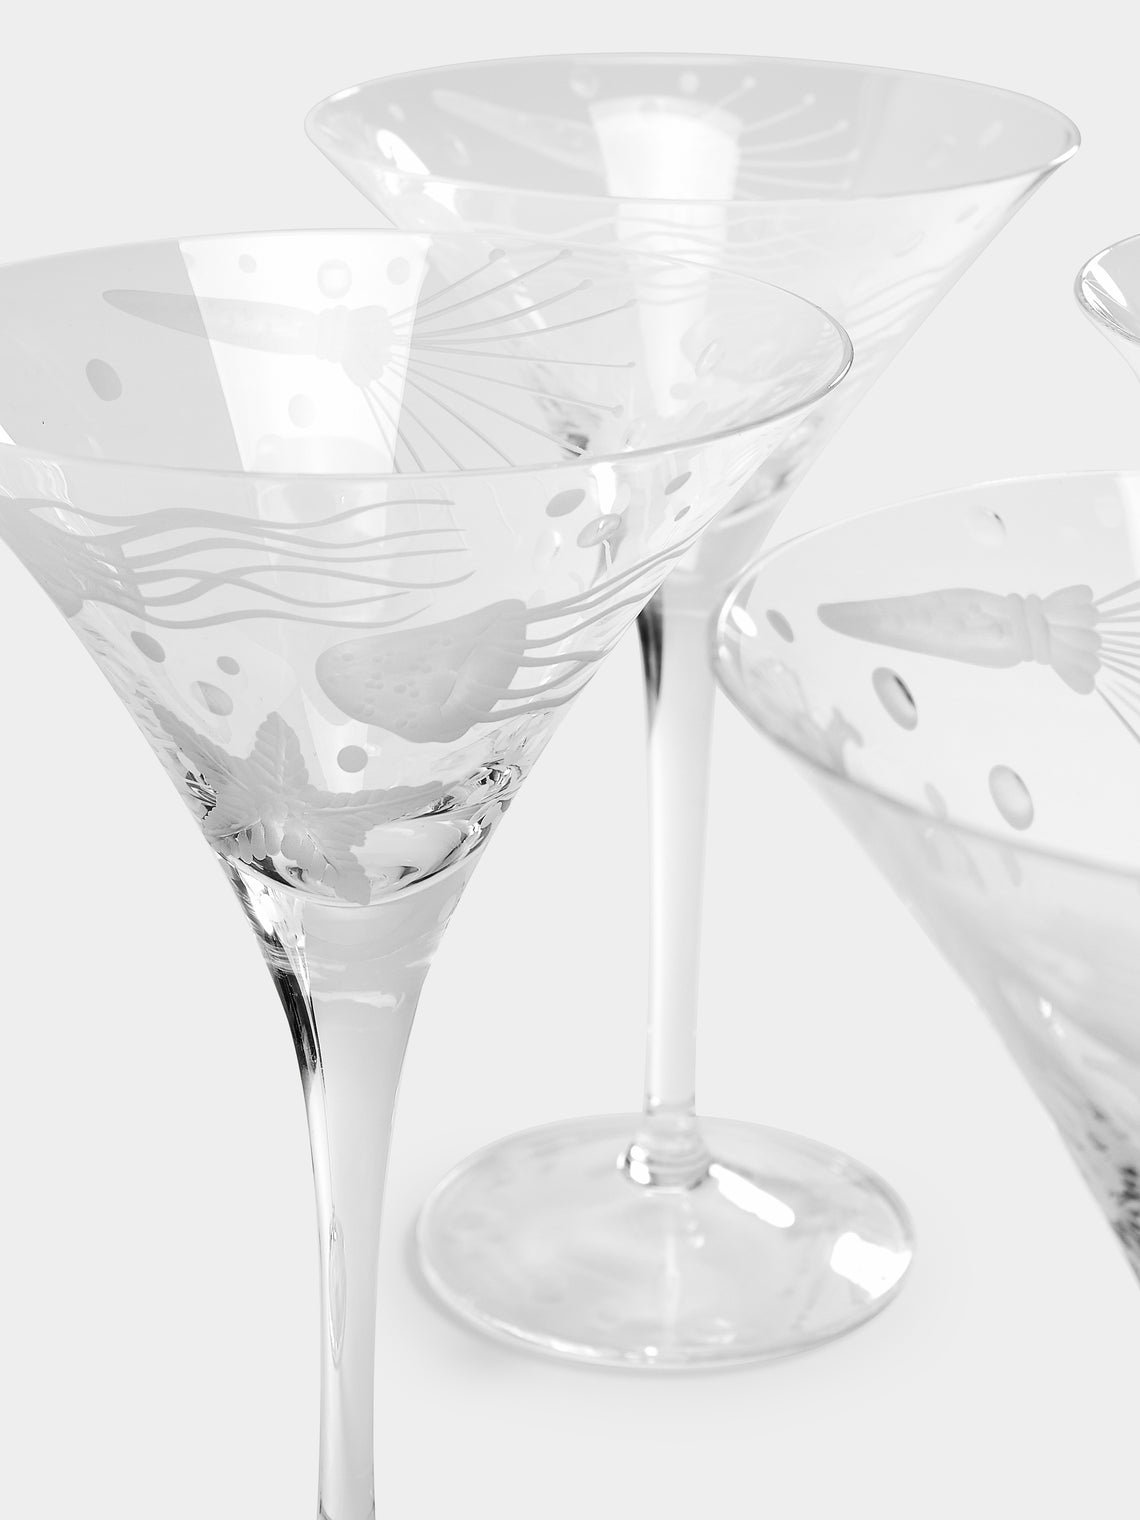 Artel - Frutti di Mare Hand-Engraved Crystal Martini Glasses (Set of 6) -  - ABASK